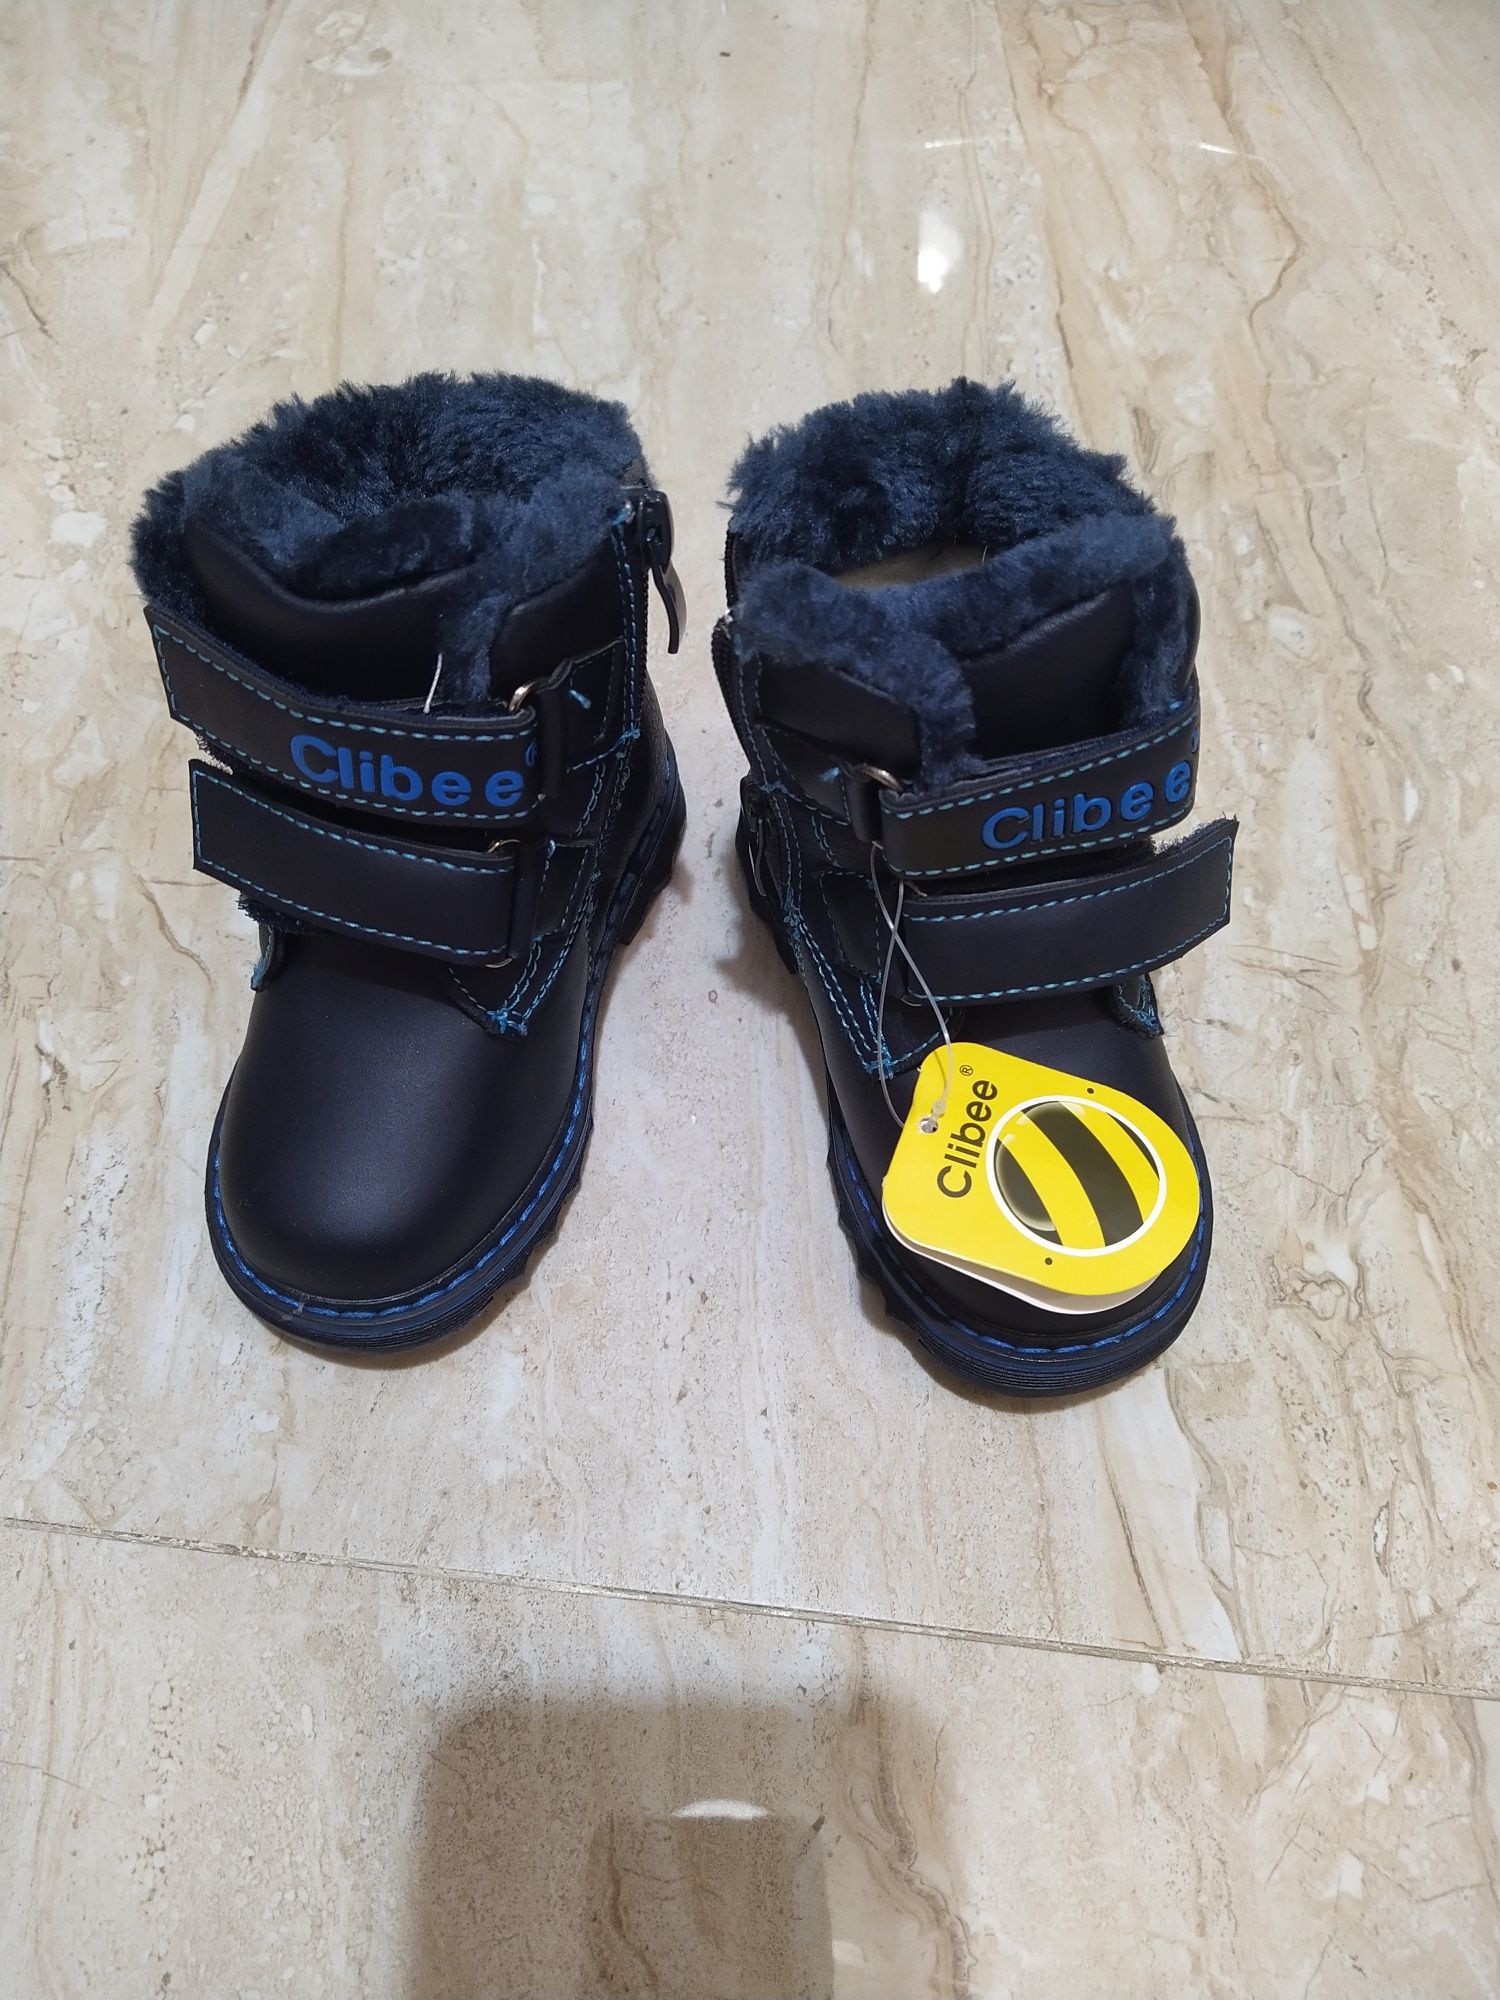 Детские зимние ботинки Clibee. Размер 21.